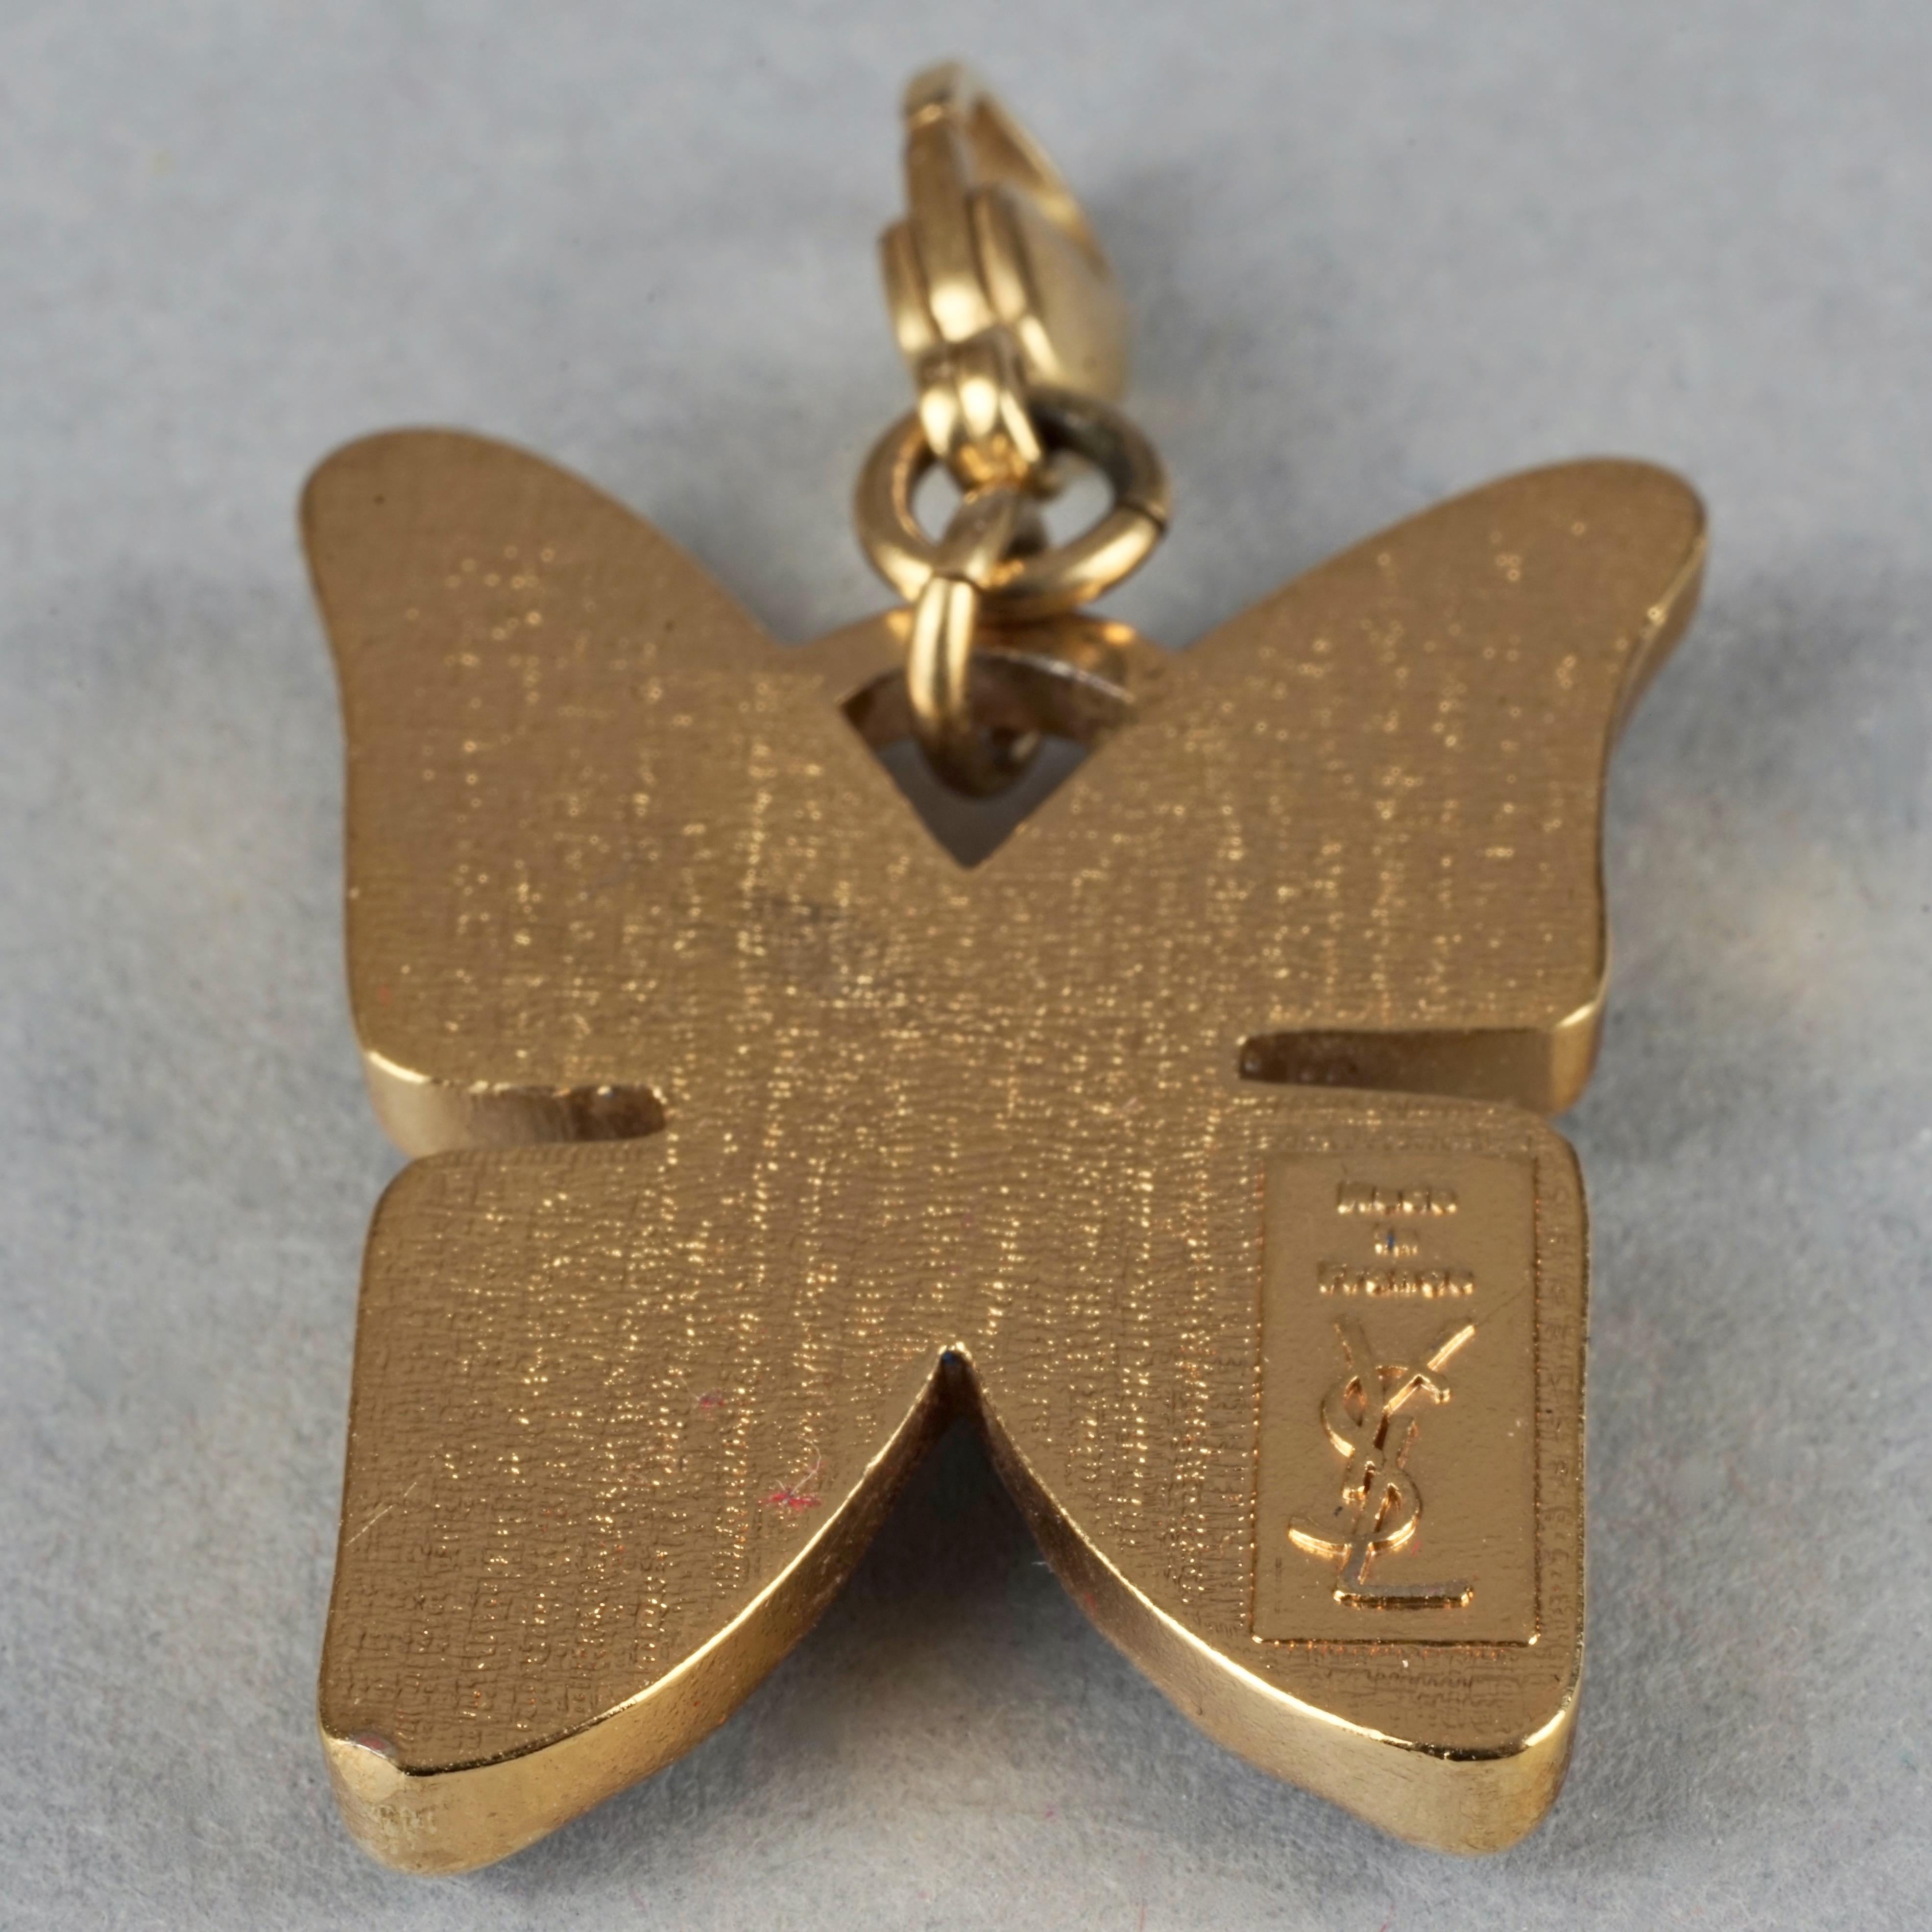 Vintage YVES SAINT LAURENT Ysl Butterfly Enamel Charm Pendant Necklace For Sale 1